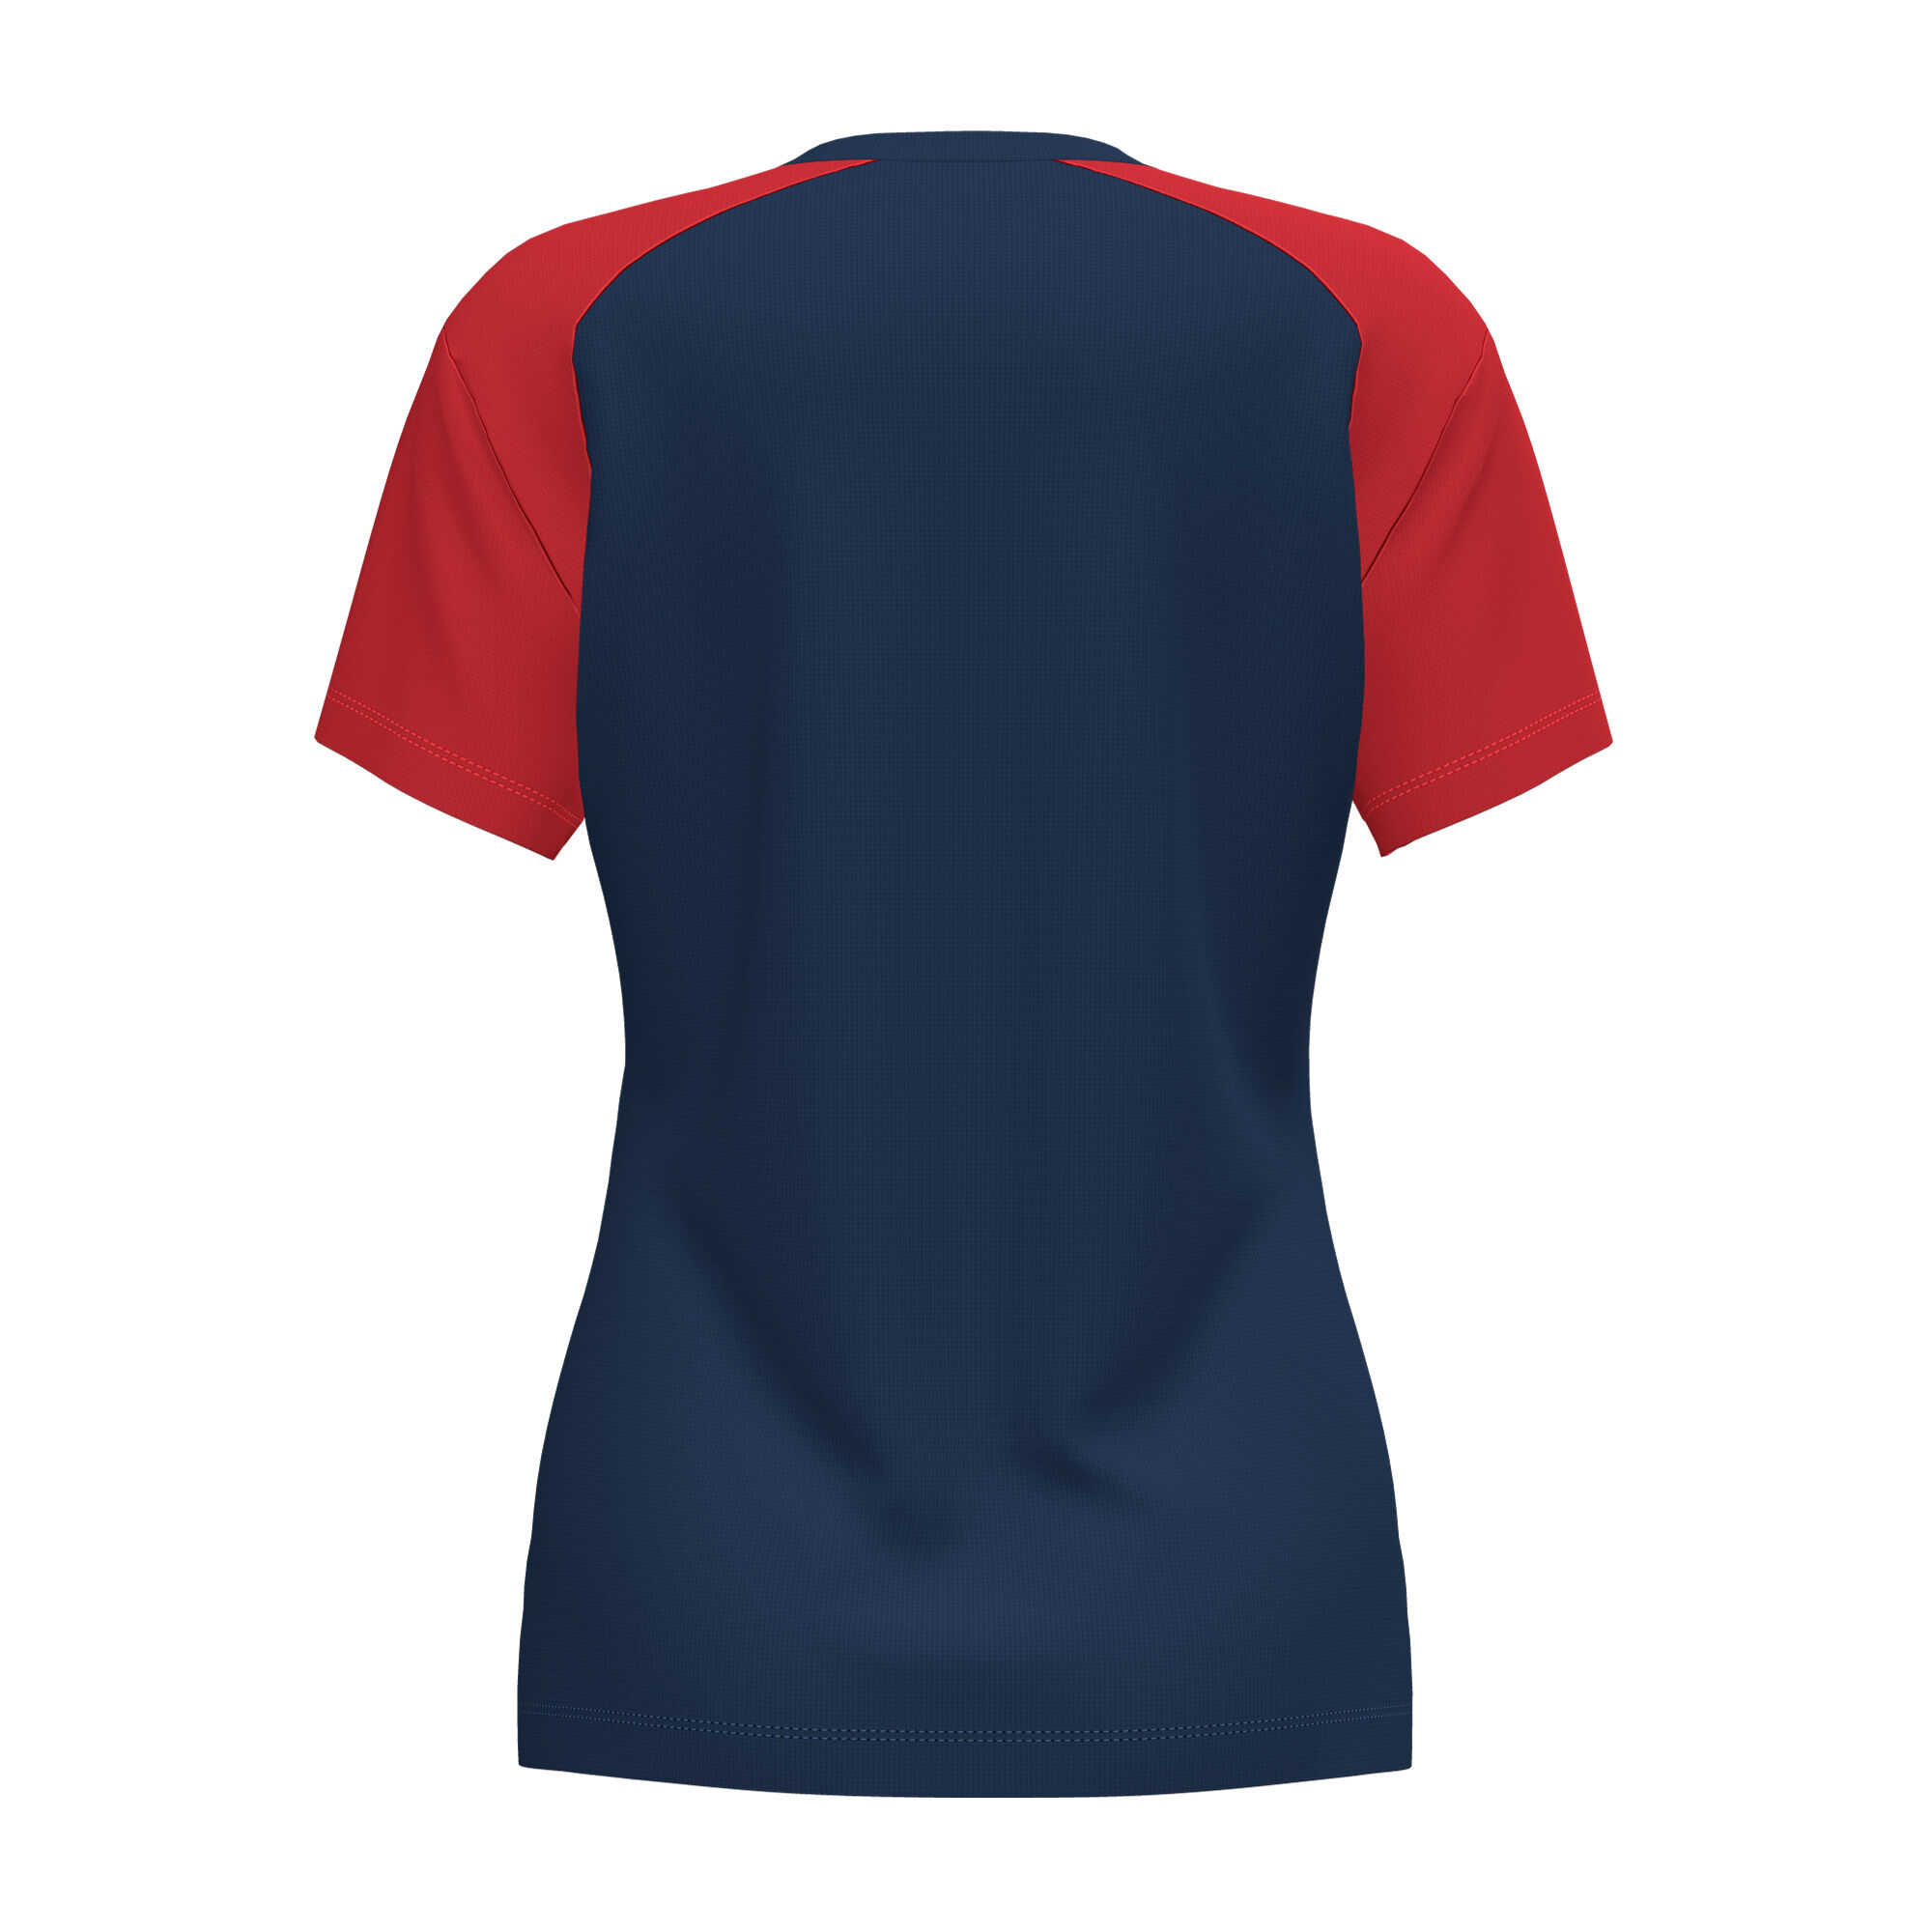 Shirt short sleeve woman Academy IV navy blue red